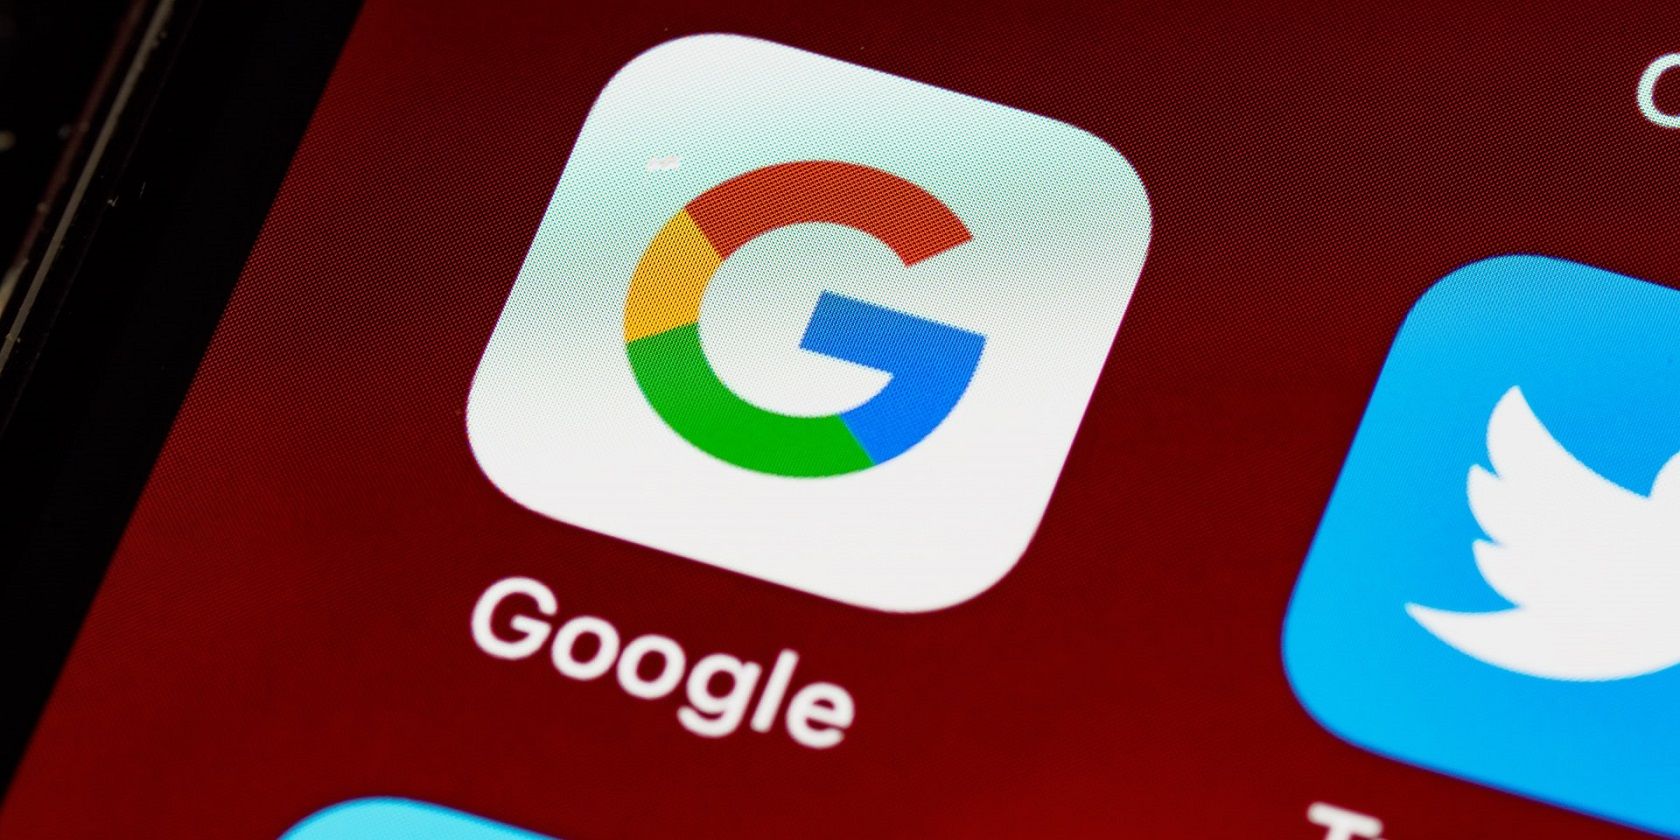 Google app logo on smartphone display